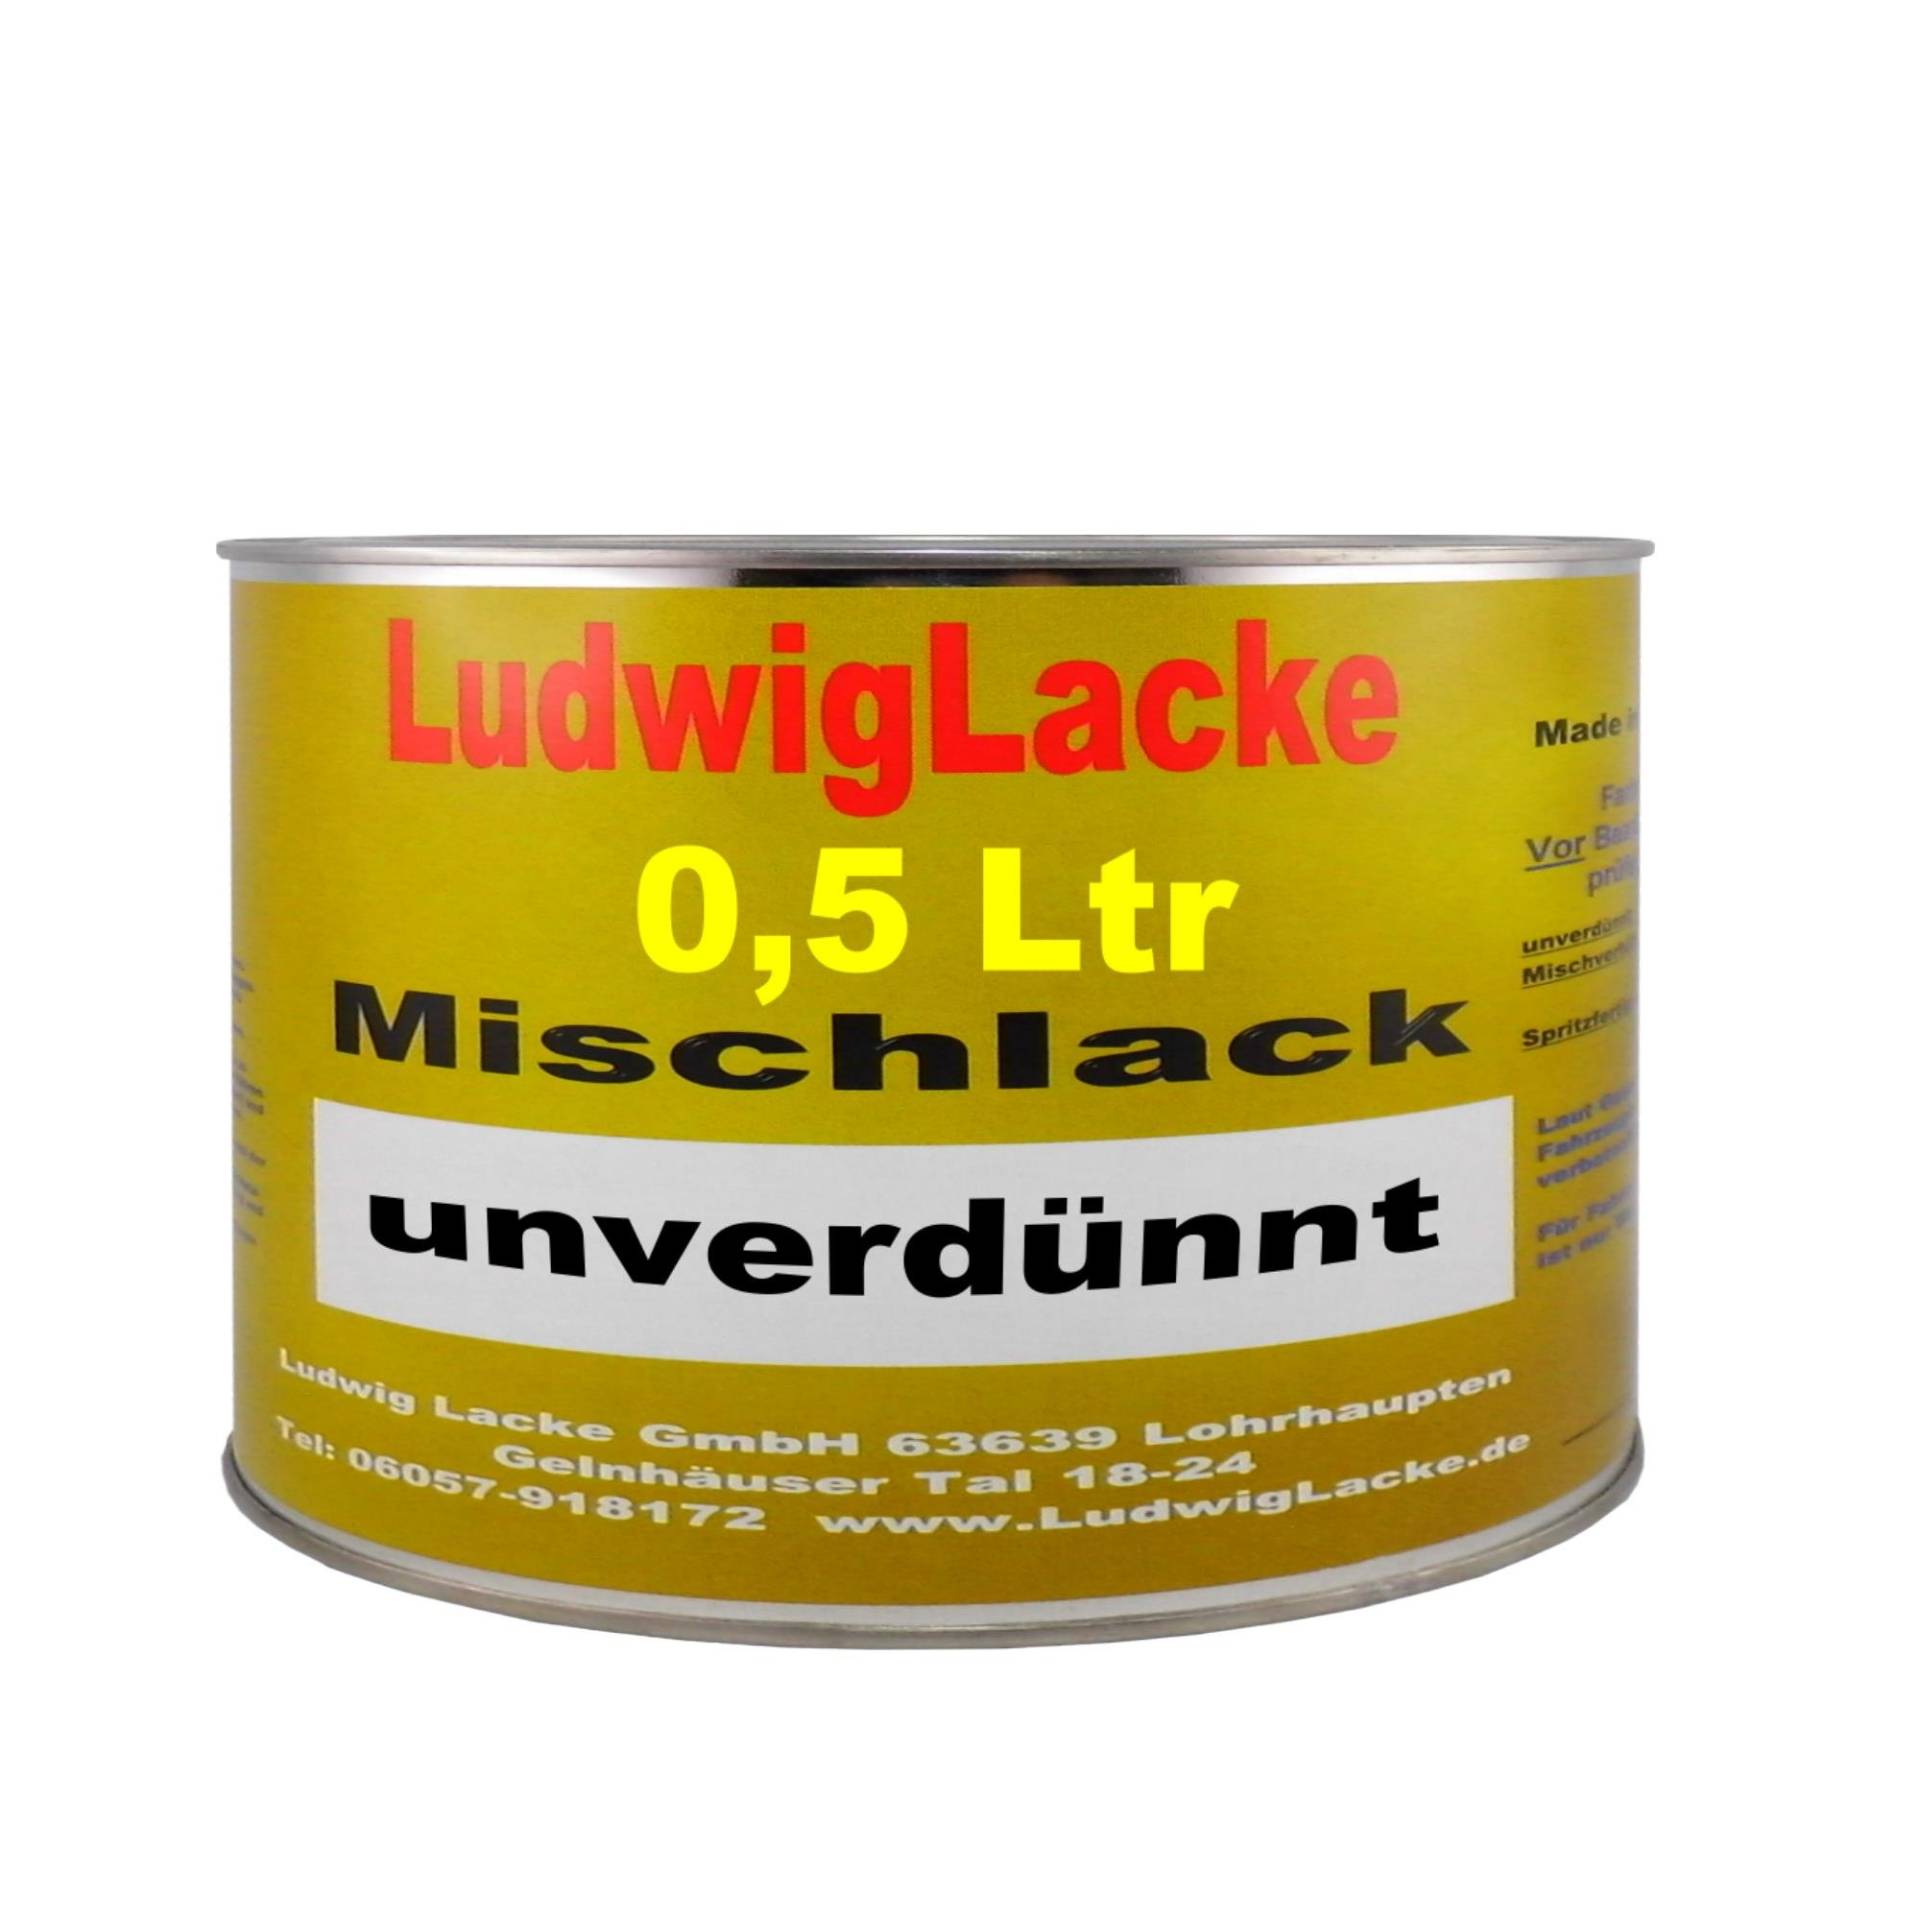 Ludwig Lacke 500 ml unverdünnter Autolack für VW Black Magic, Perleffekt, C9Z Bj.94-12 von Ludwig Lacke